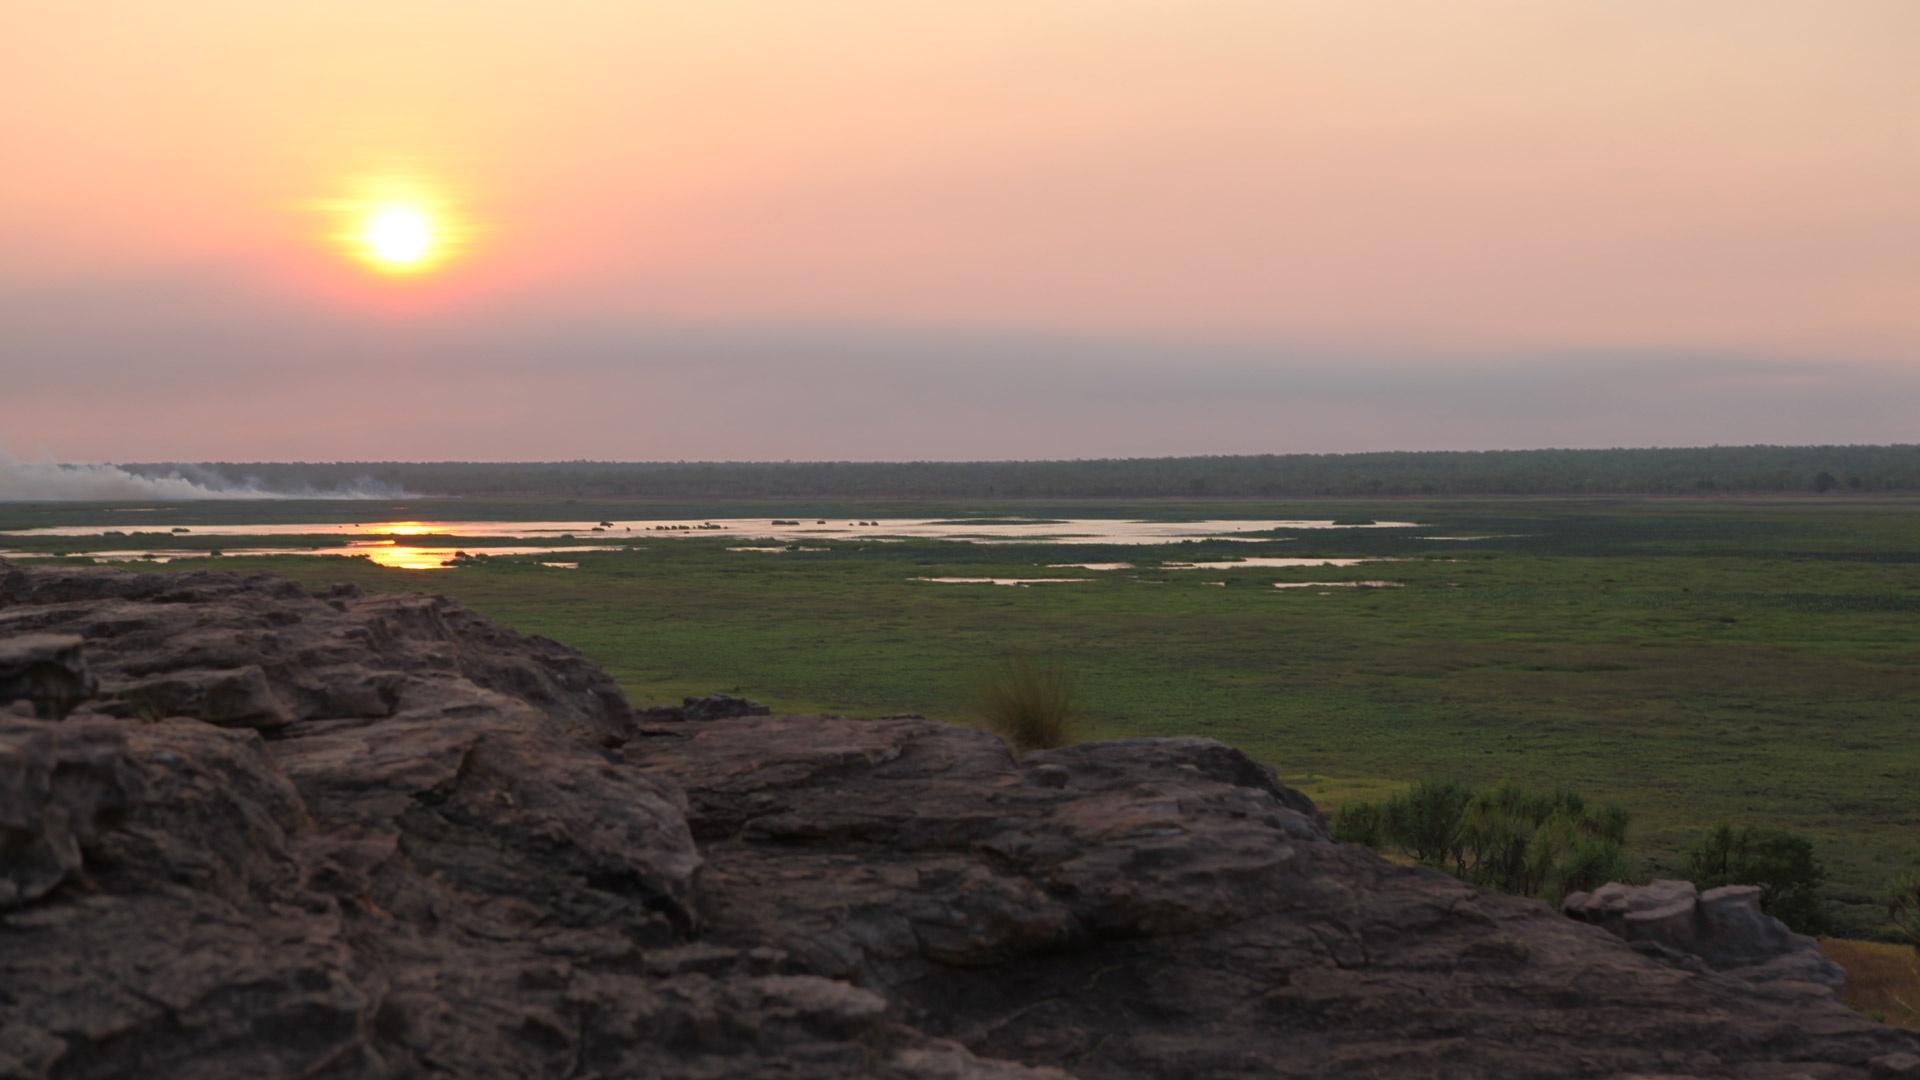 Sunset at Kakadu National Park, Australia, where uranium deposits are mined.